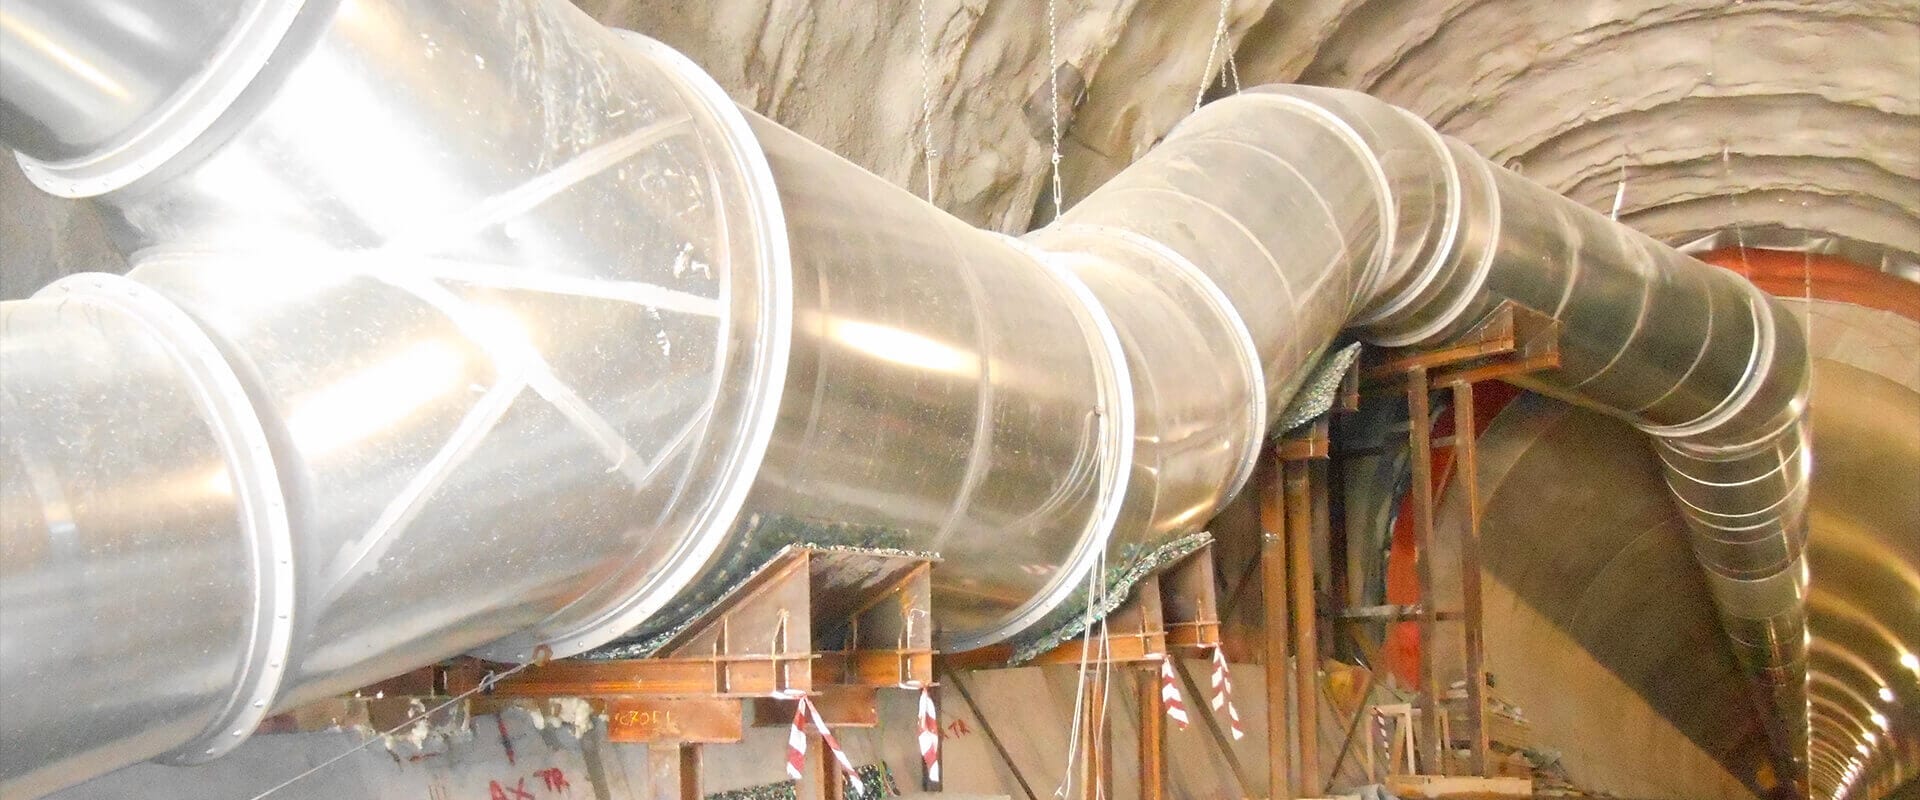 Cravasco tunnel (Italy) ventilation Cogemacoustic